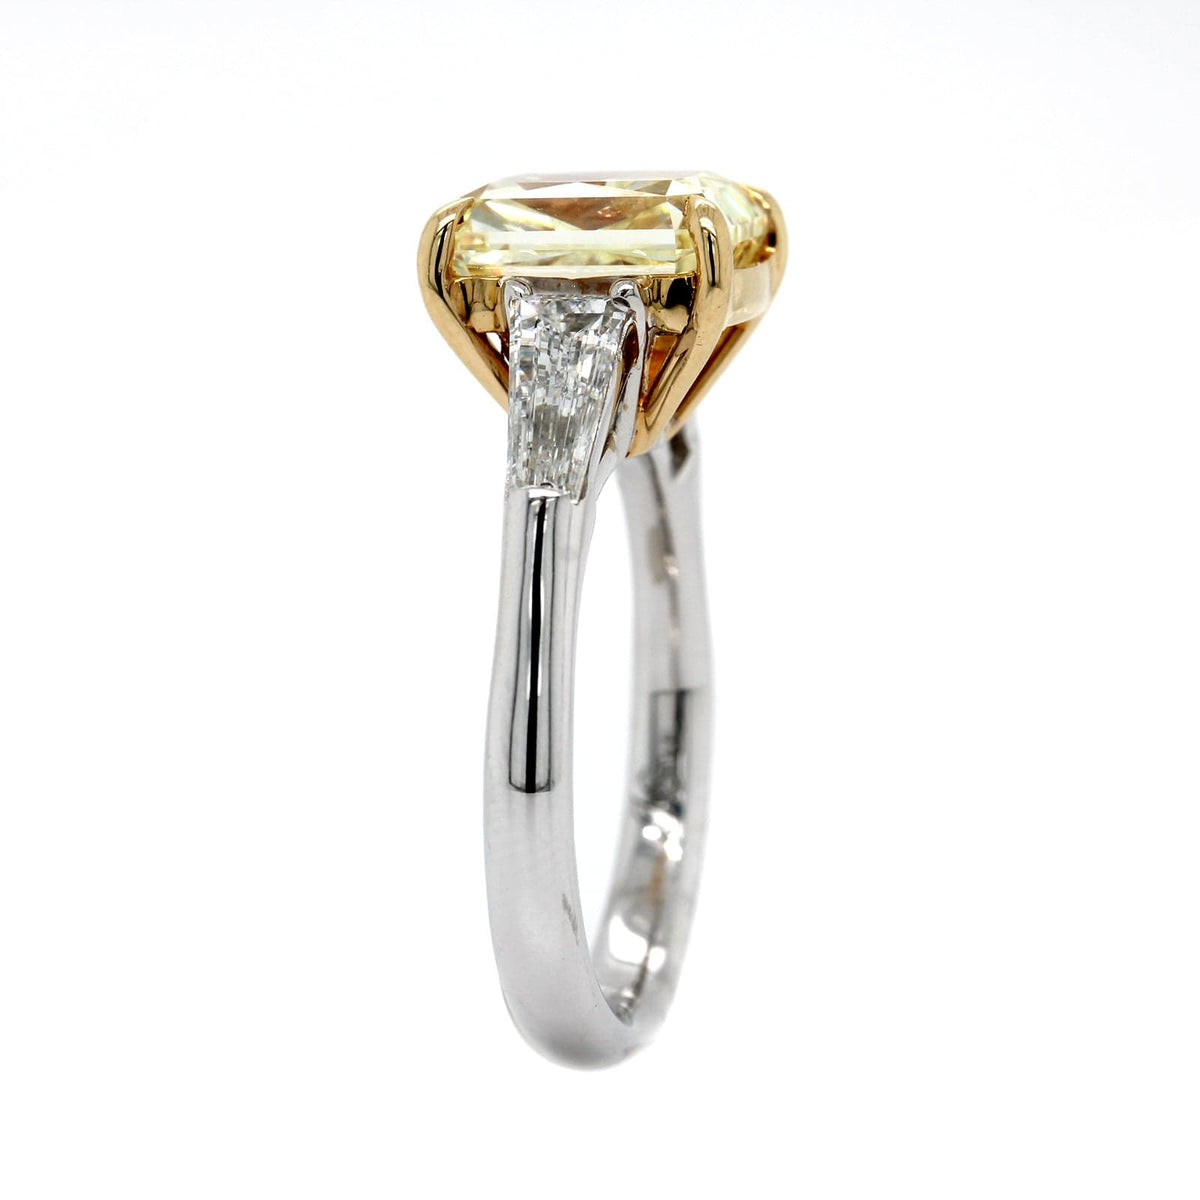 Platinum and 18K Yellow Gold Radiant Cut Diamond Engagement Ring